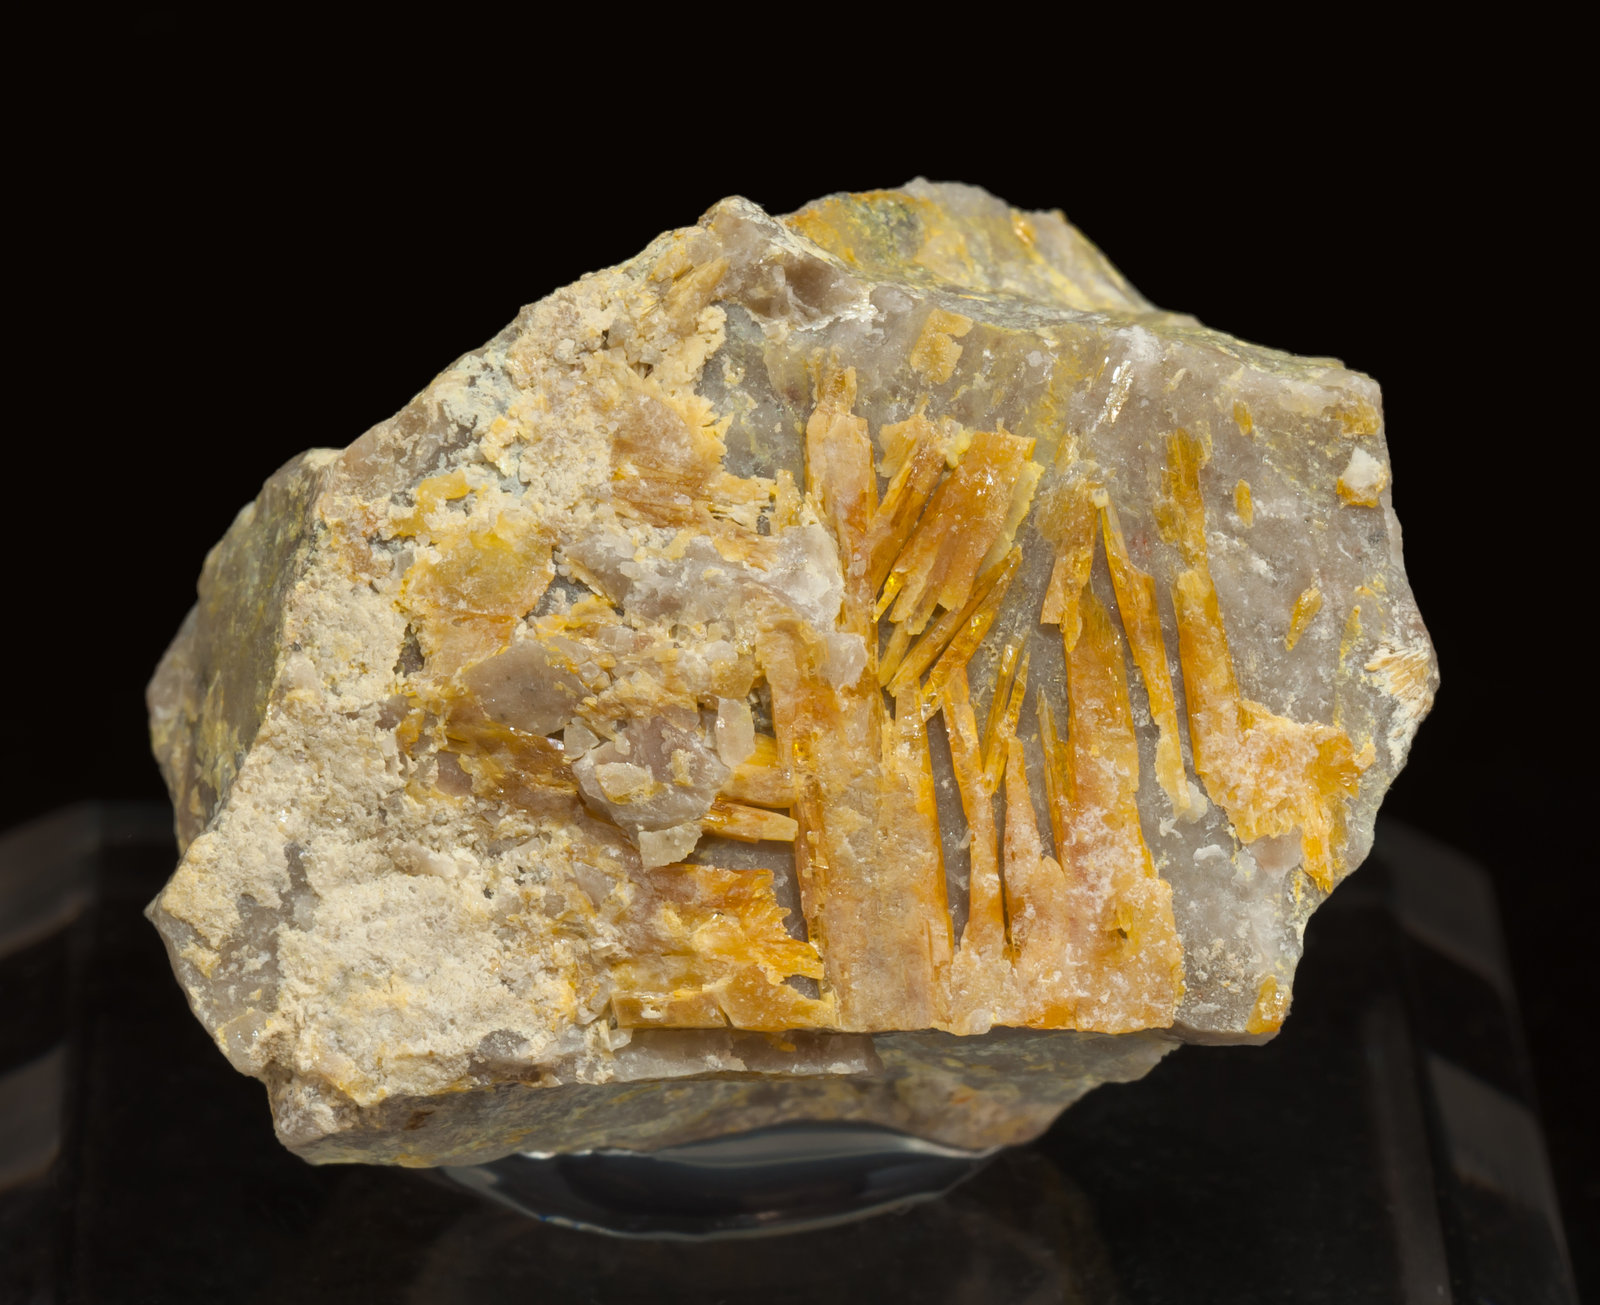 specimens/s_imagesAL4/Tellurite-TY48AL4f.jpg